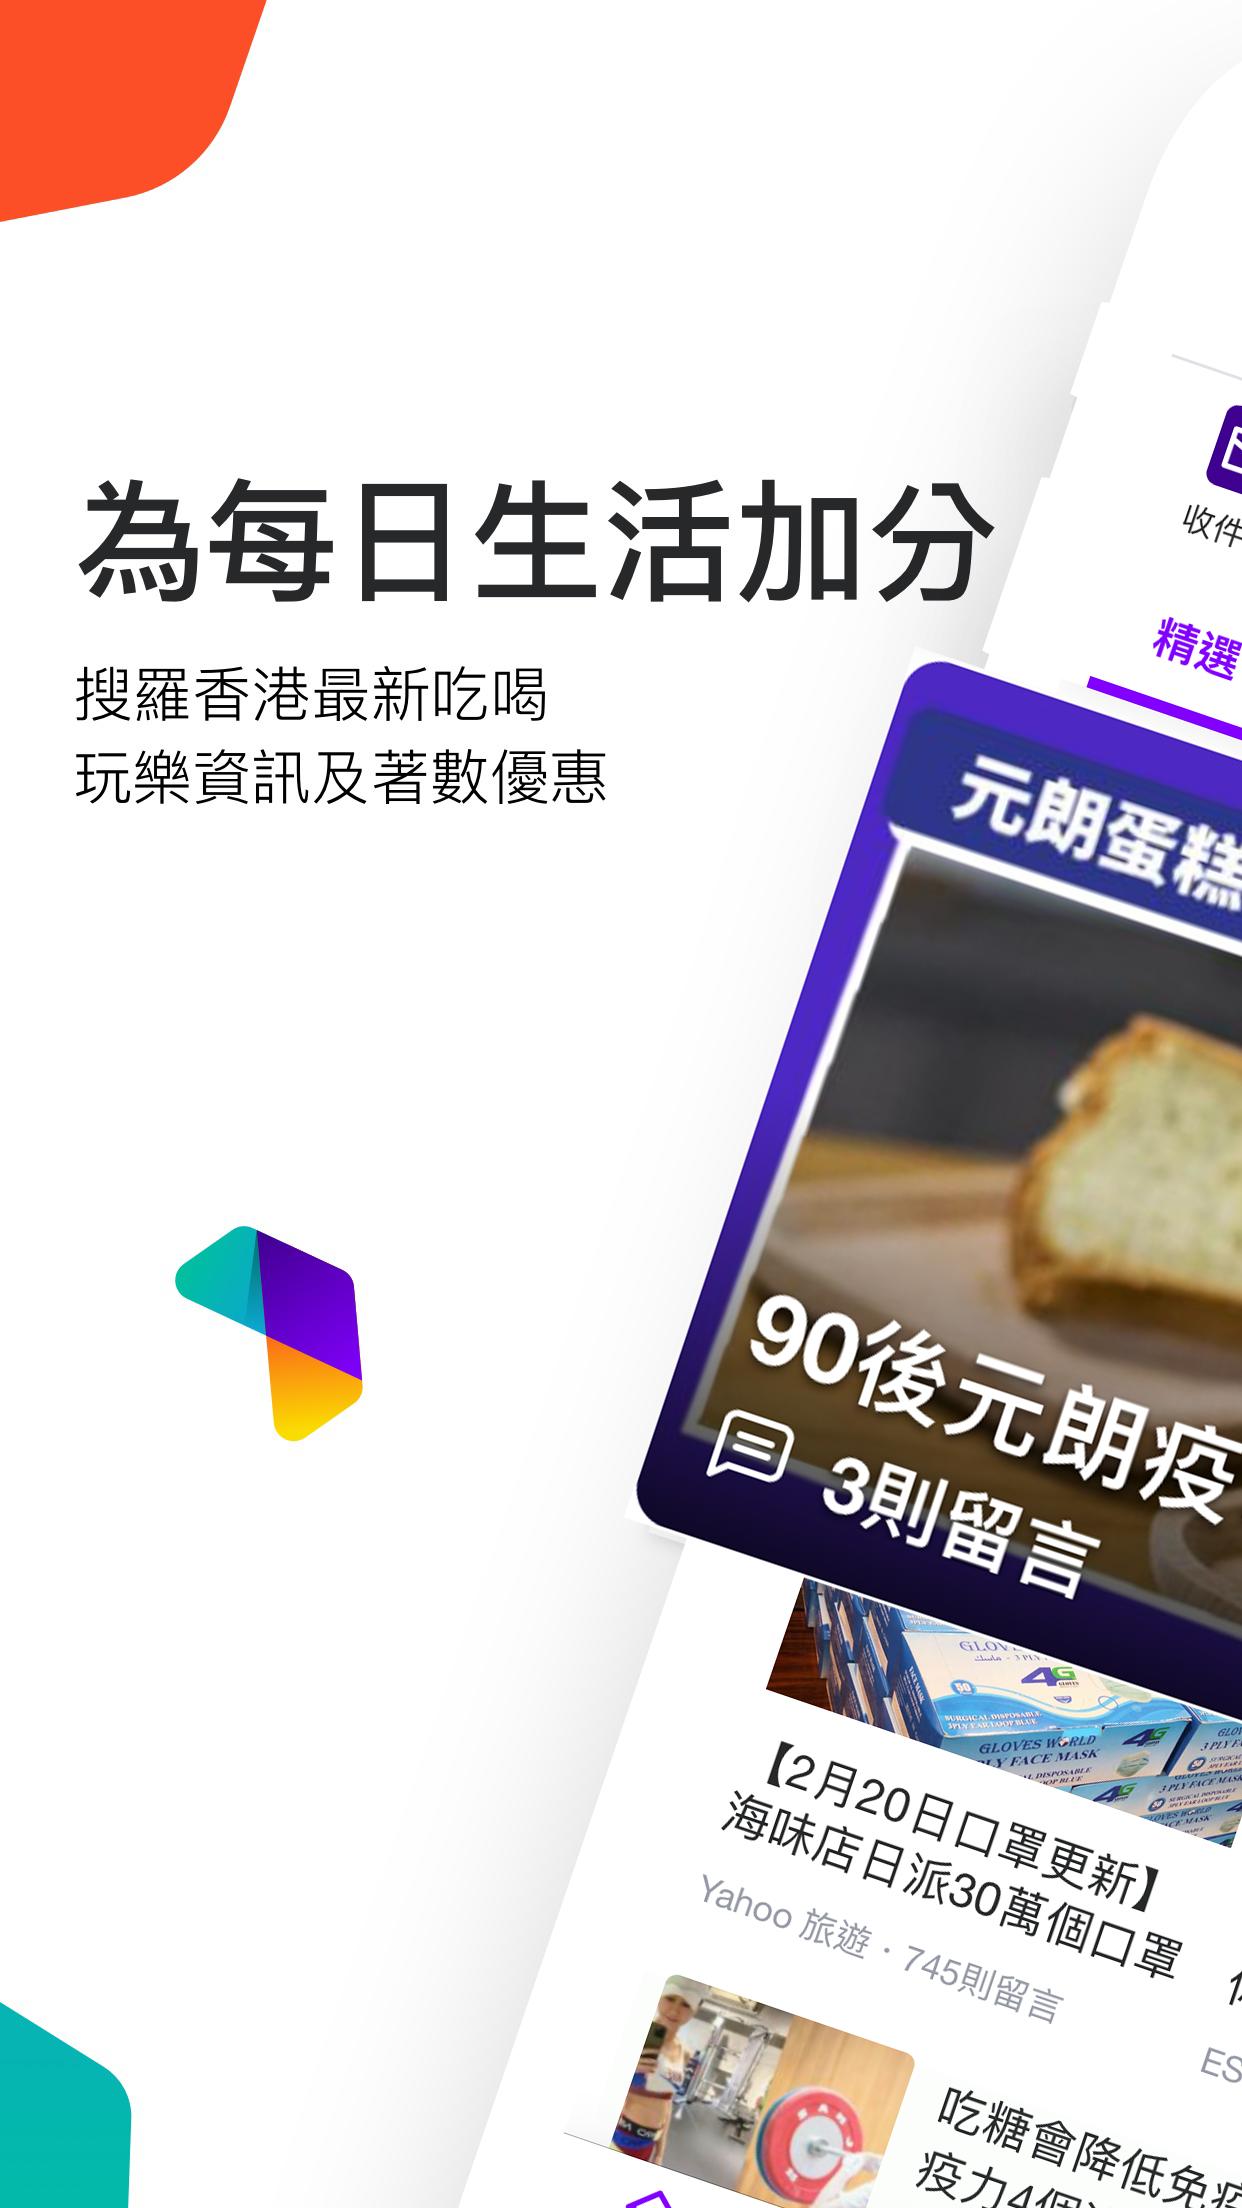 Yahoo Member優惠 2.39.1 Screenshot 1